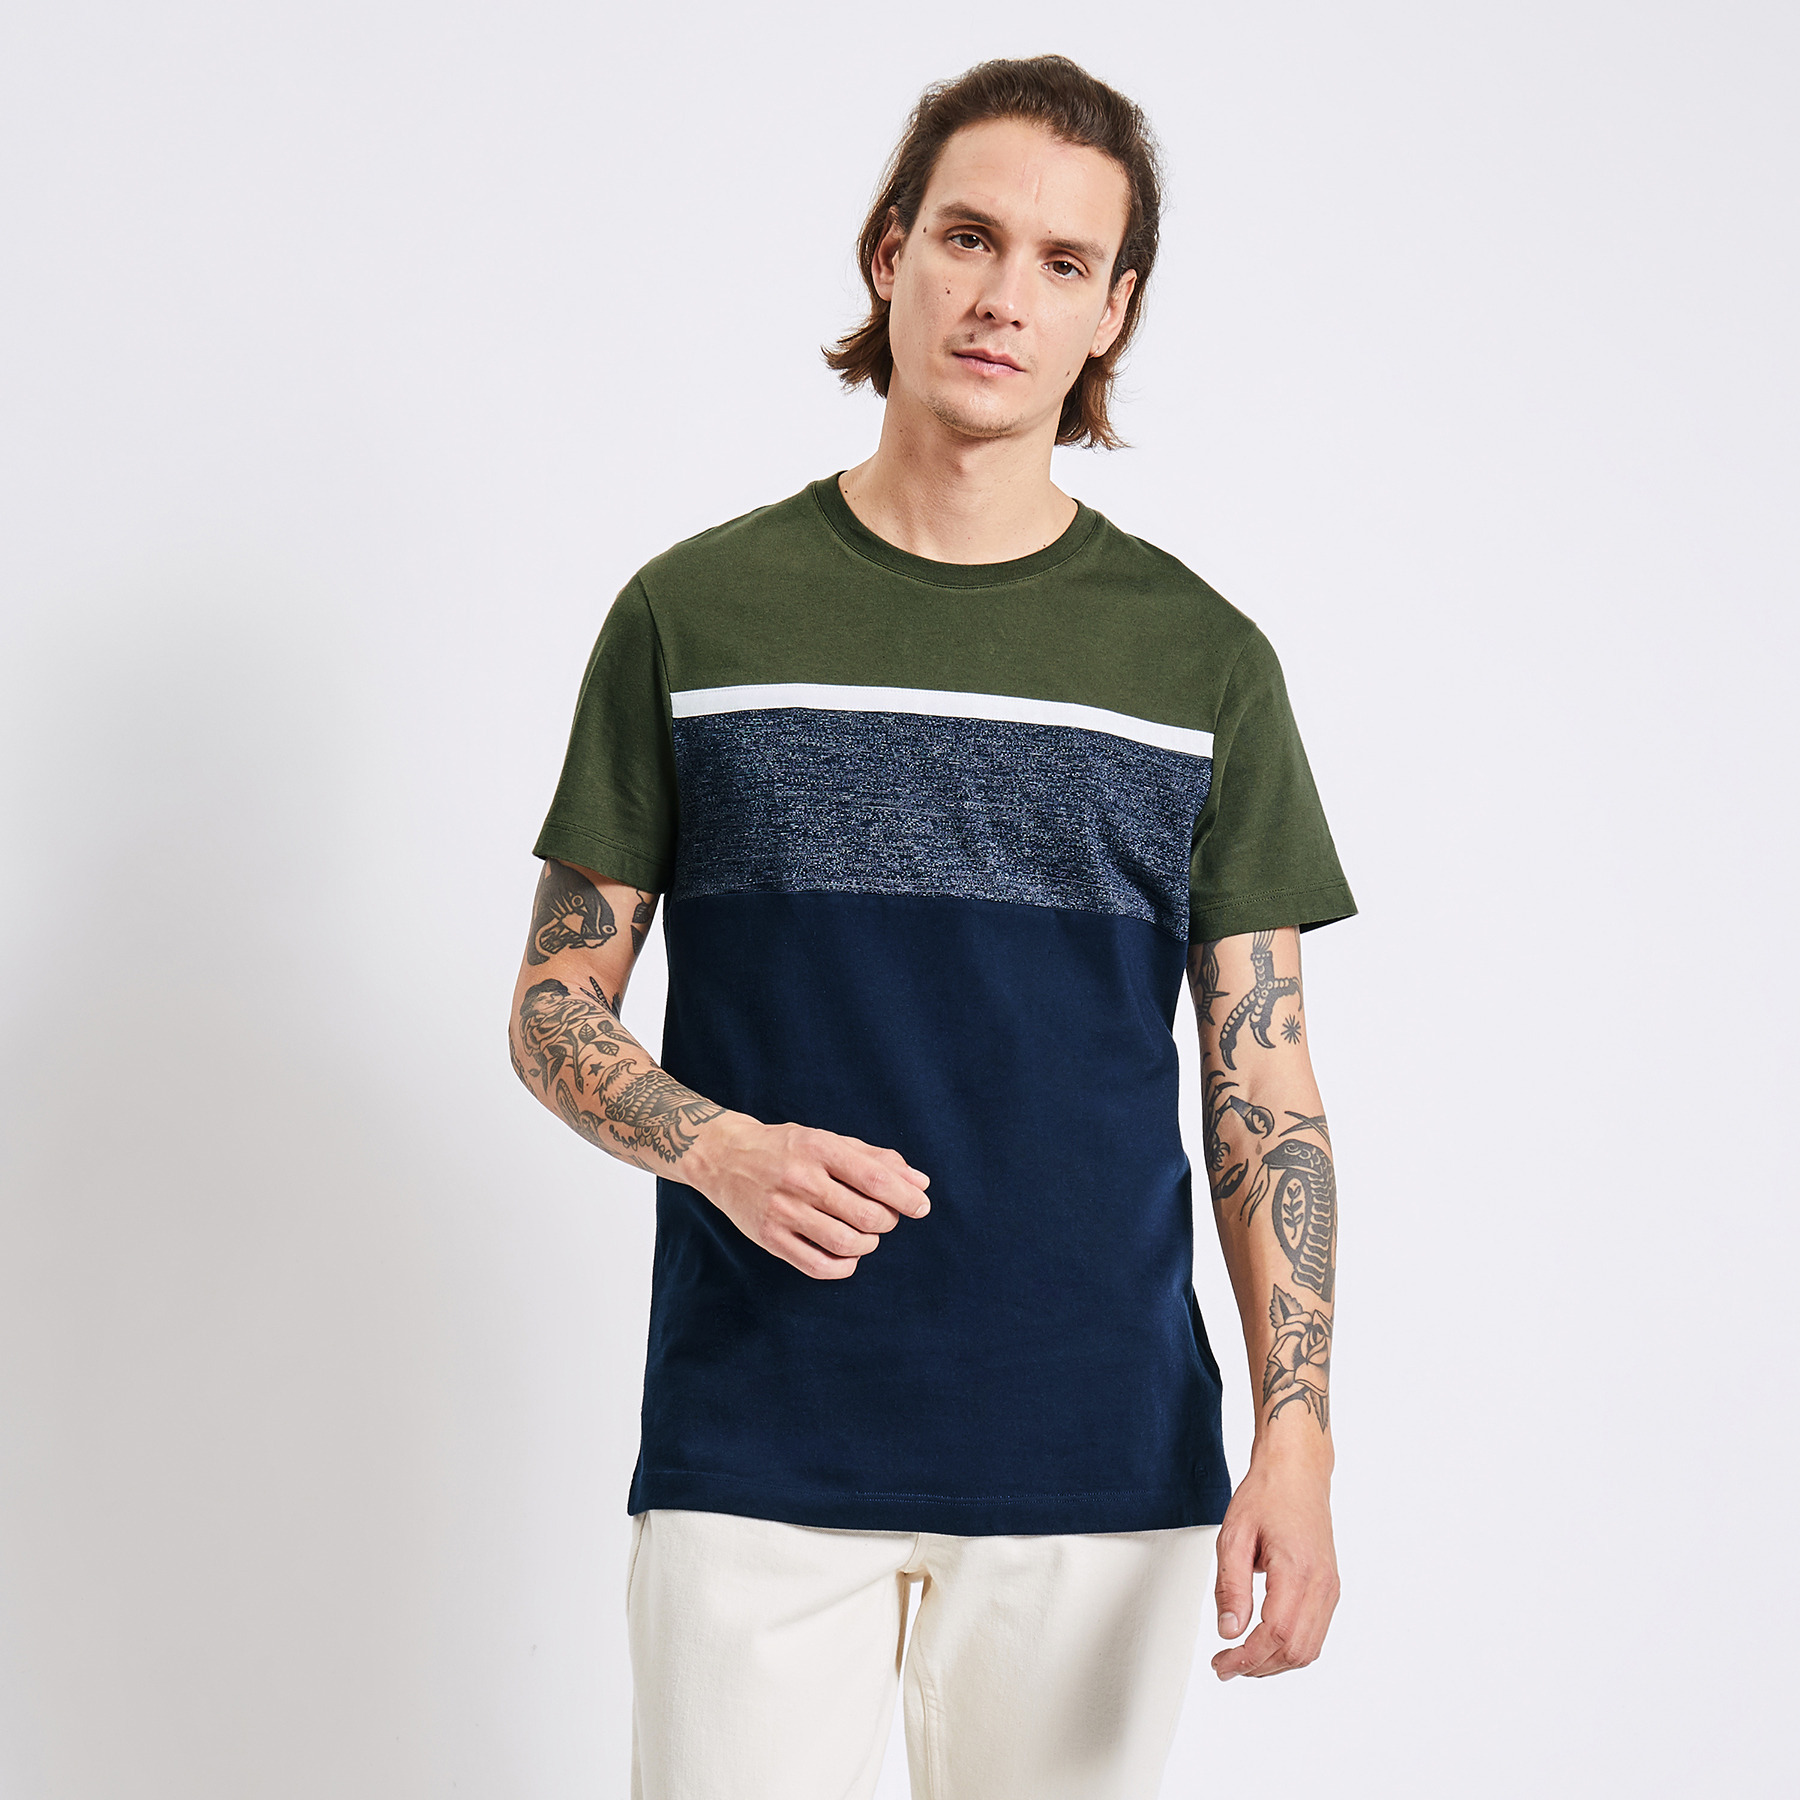 Tee shirt colorblock Vert kaki S 71% Coton, 29% Polyester, 100% Coton Homme Jules